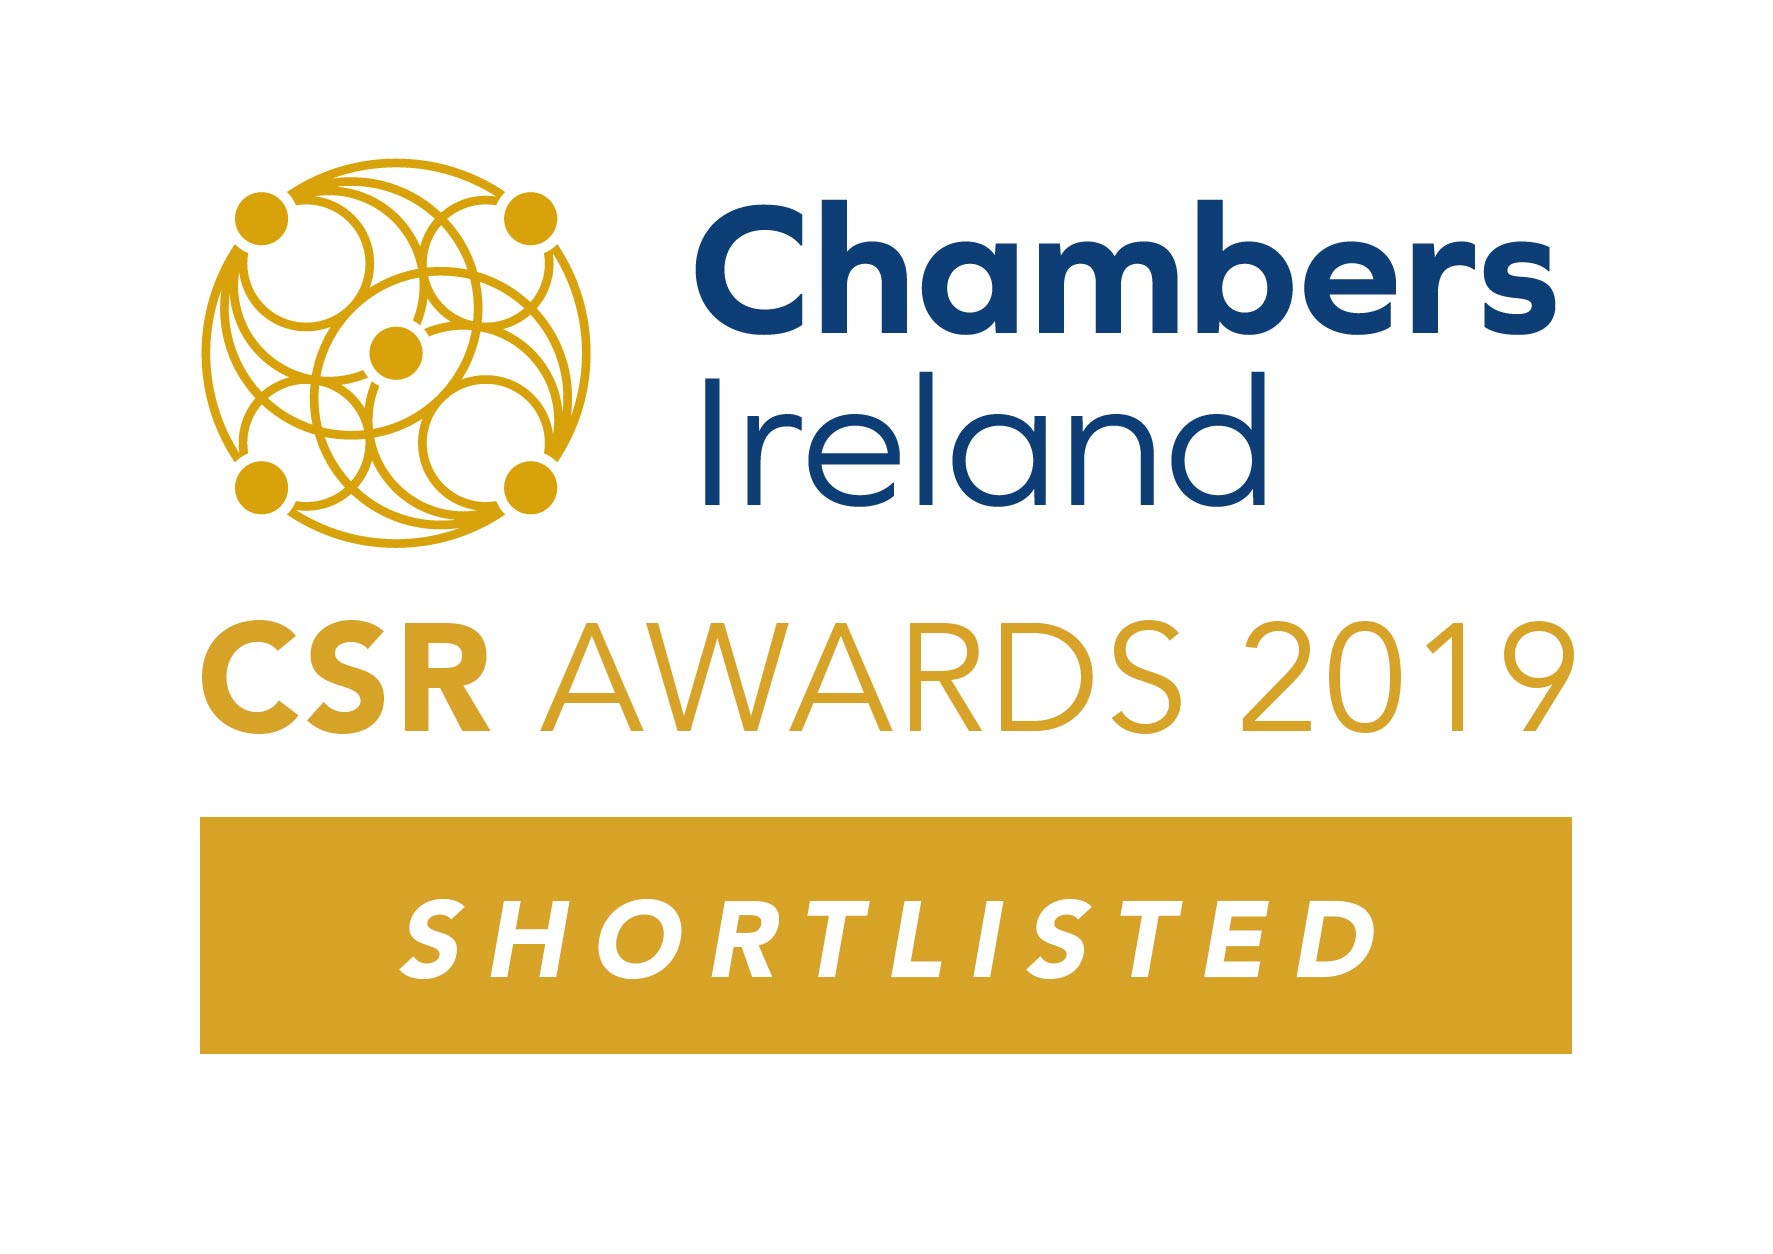 Chambers Ireland CSR Awards 2019 Shortlisted badge